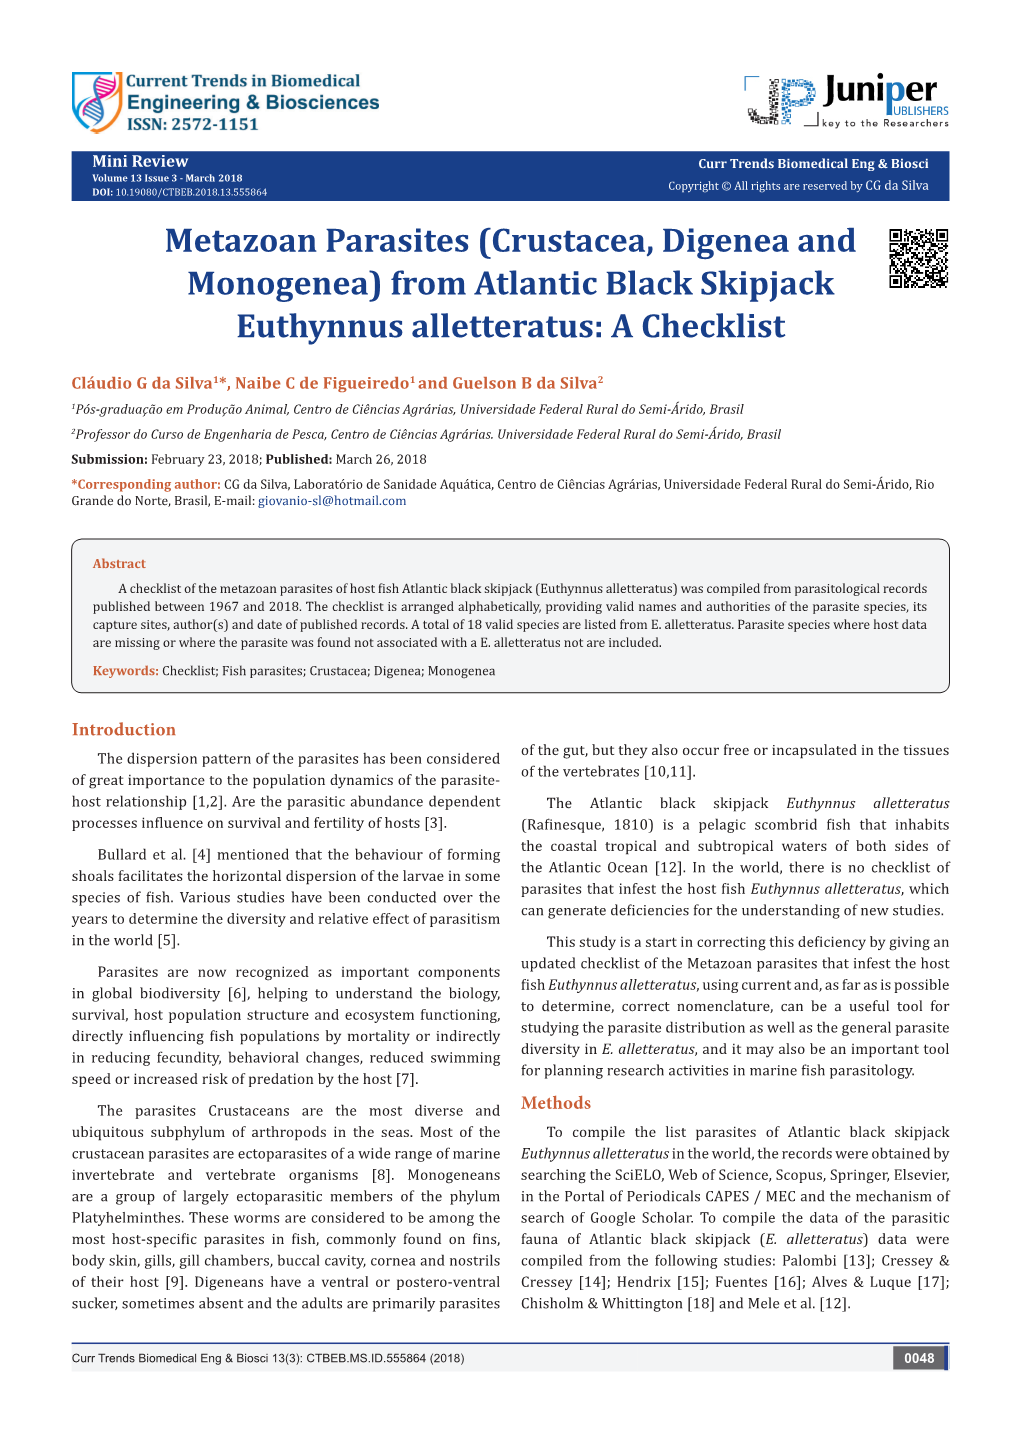 Metazoan Parasites (Crustacea, Digenea and Monogenea) from Atlantic Black Skipjack Euthynnus Alletteratus: a Checklist